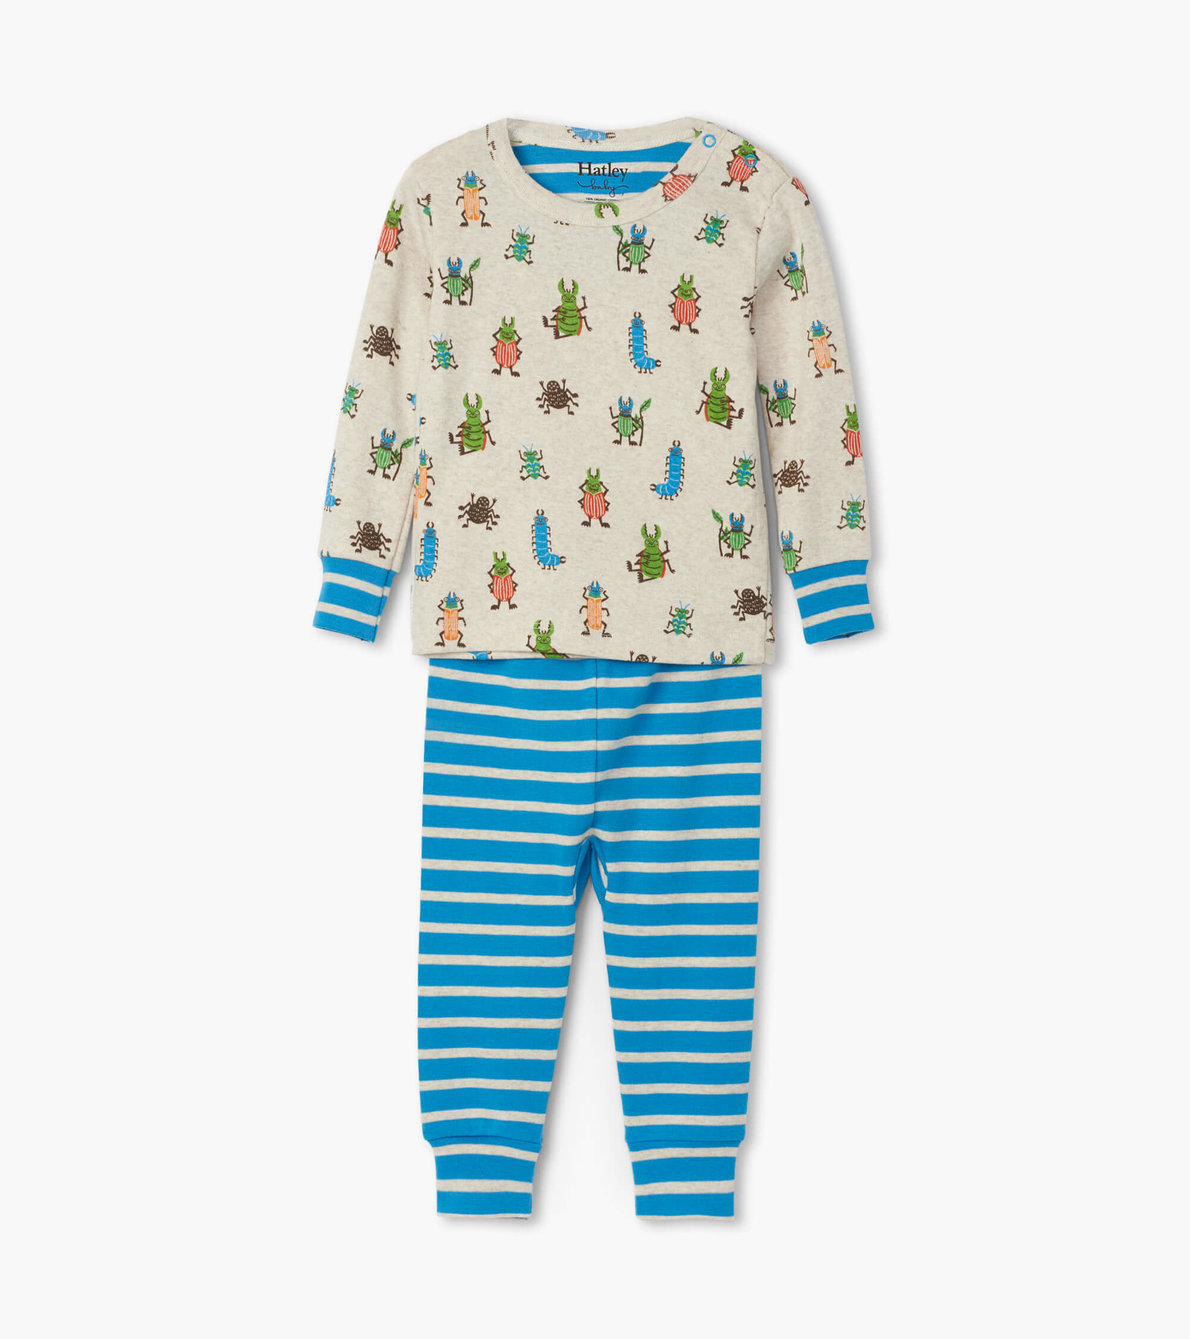 View larger image of Snug Bugs Organic Cotton Baby Pajama Set